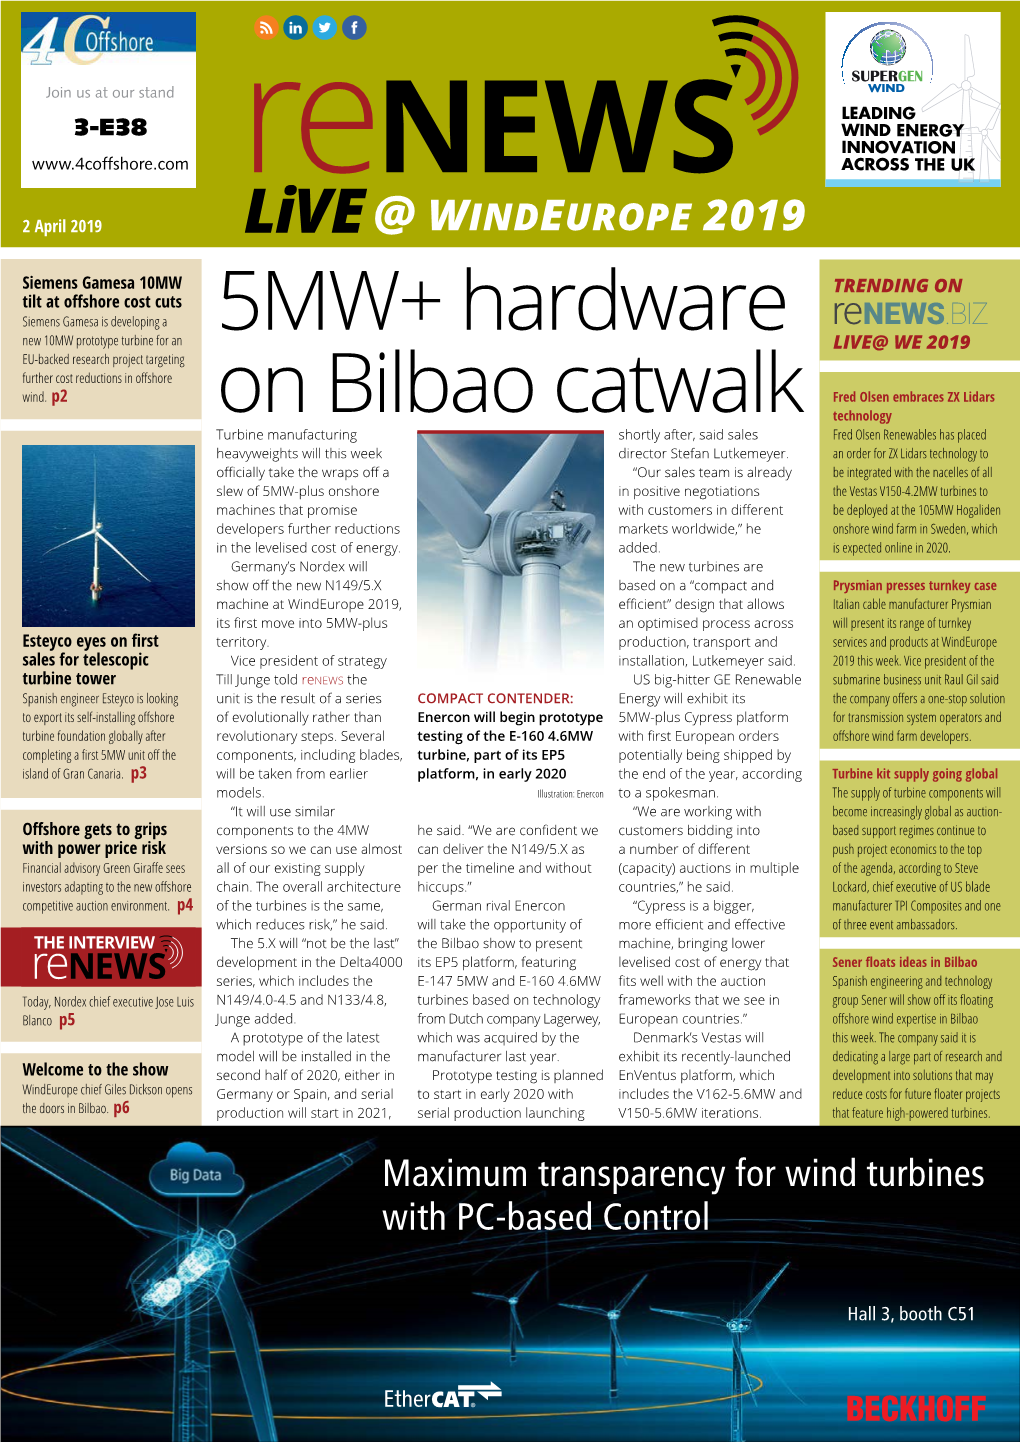 5MW+ Hardware on Bilbao Catwalk